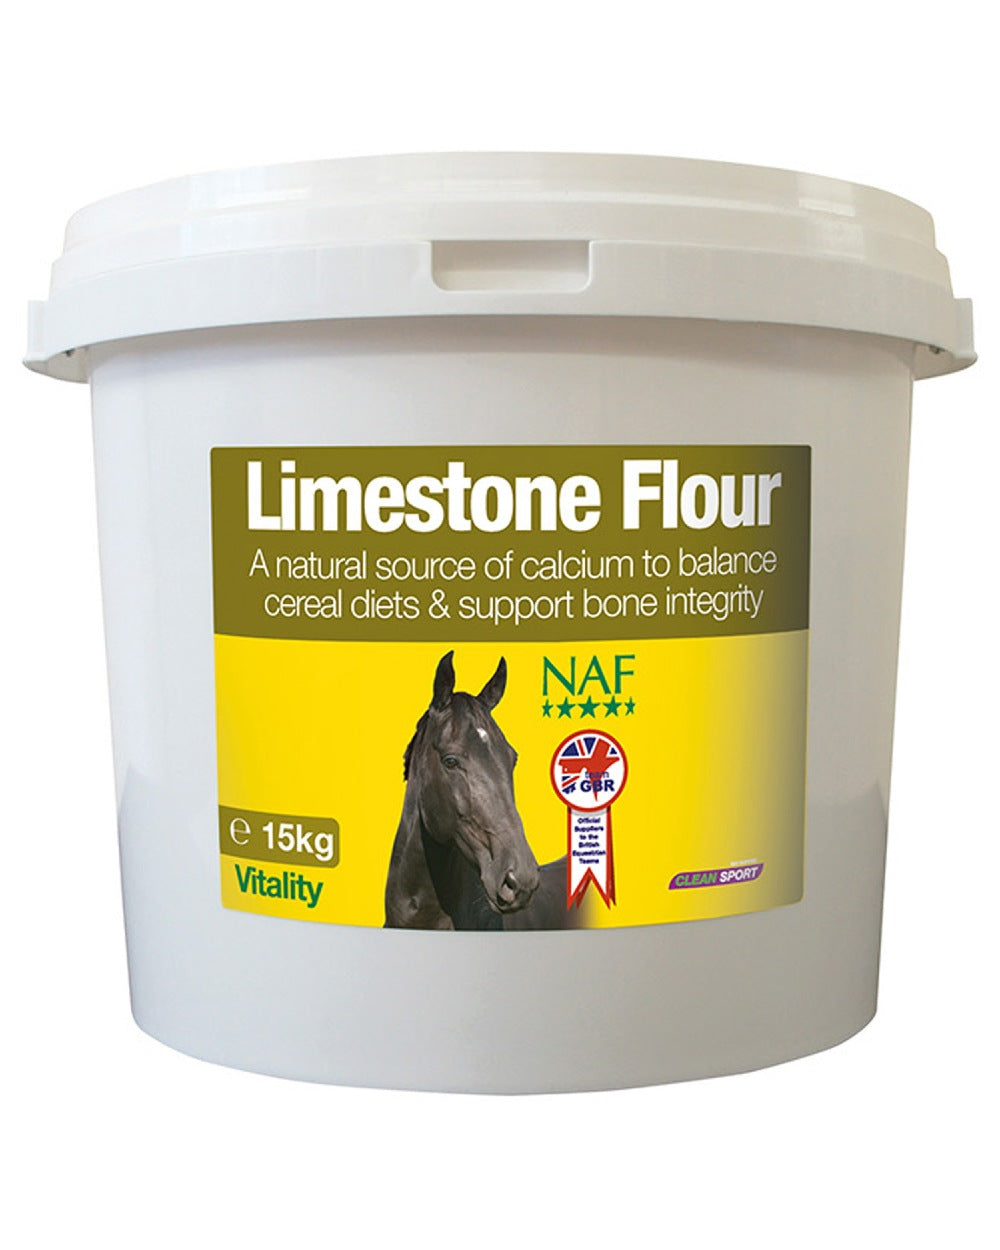 NAF Limestone Flour 15kg on white background